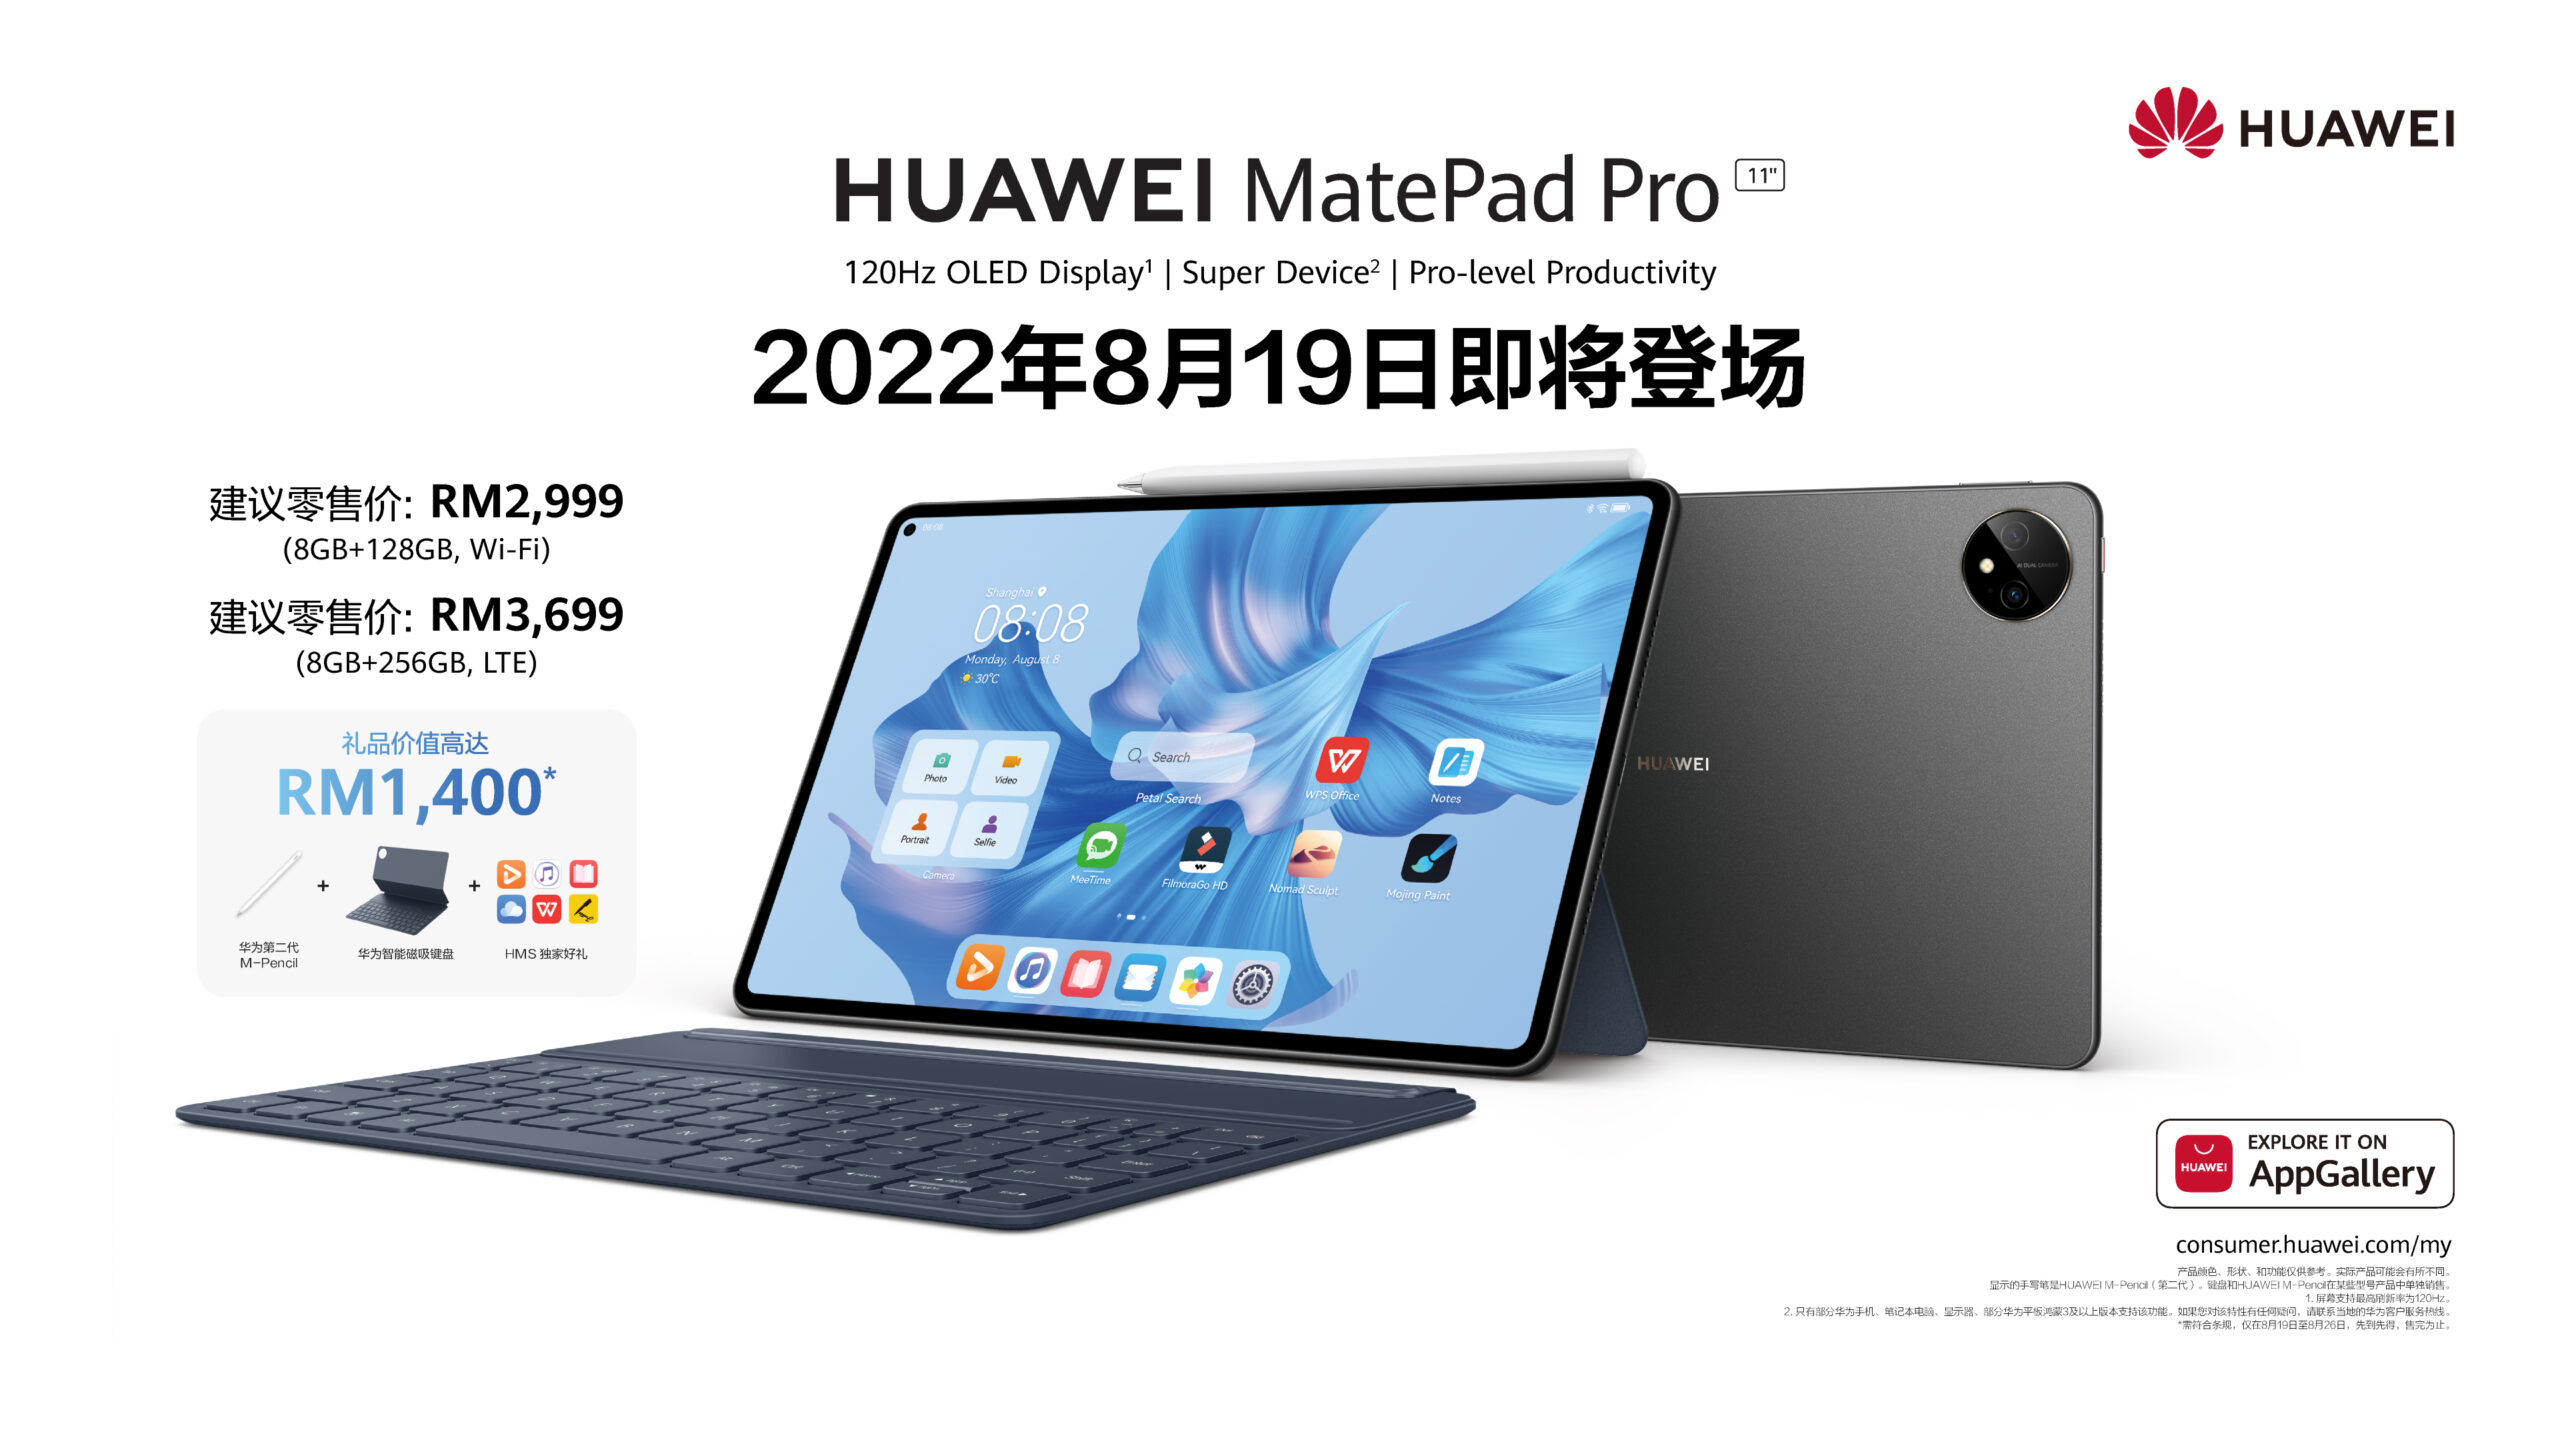 CN HUAWEI 最新平板 MatePad Pro 11 将在8月19 发布 scaled